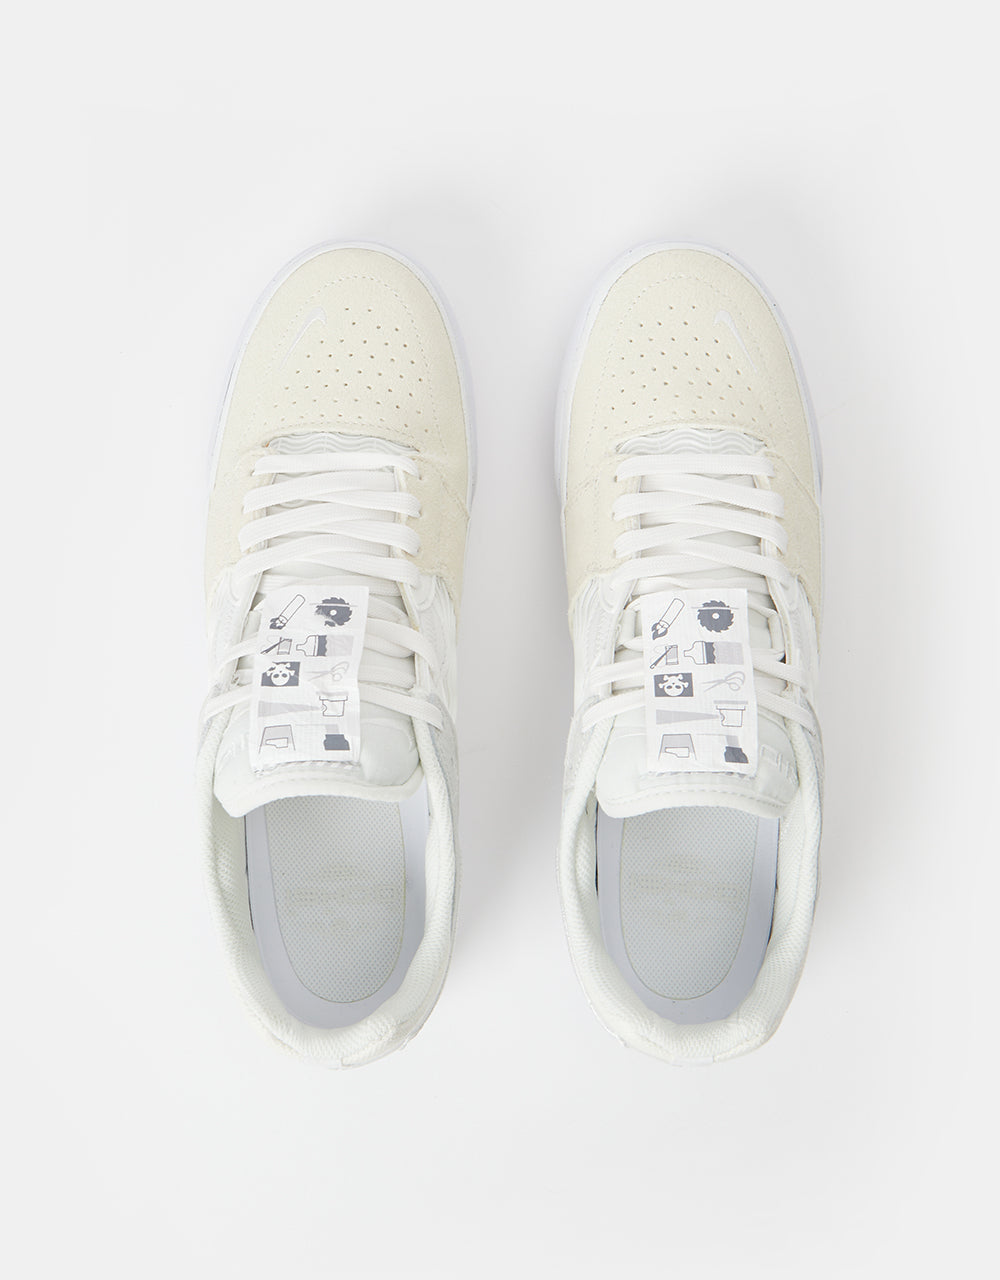 Nike SB Ishod Premium Skate Shoes - Summit White/Summit White-Summit White